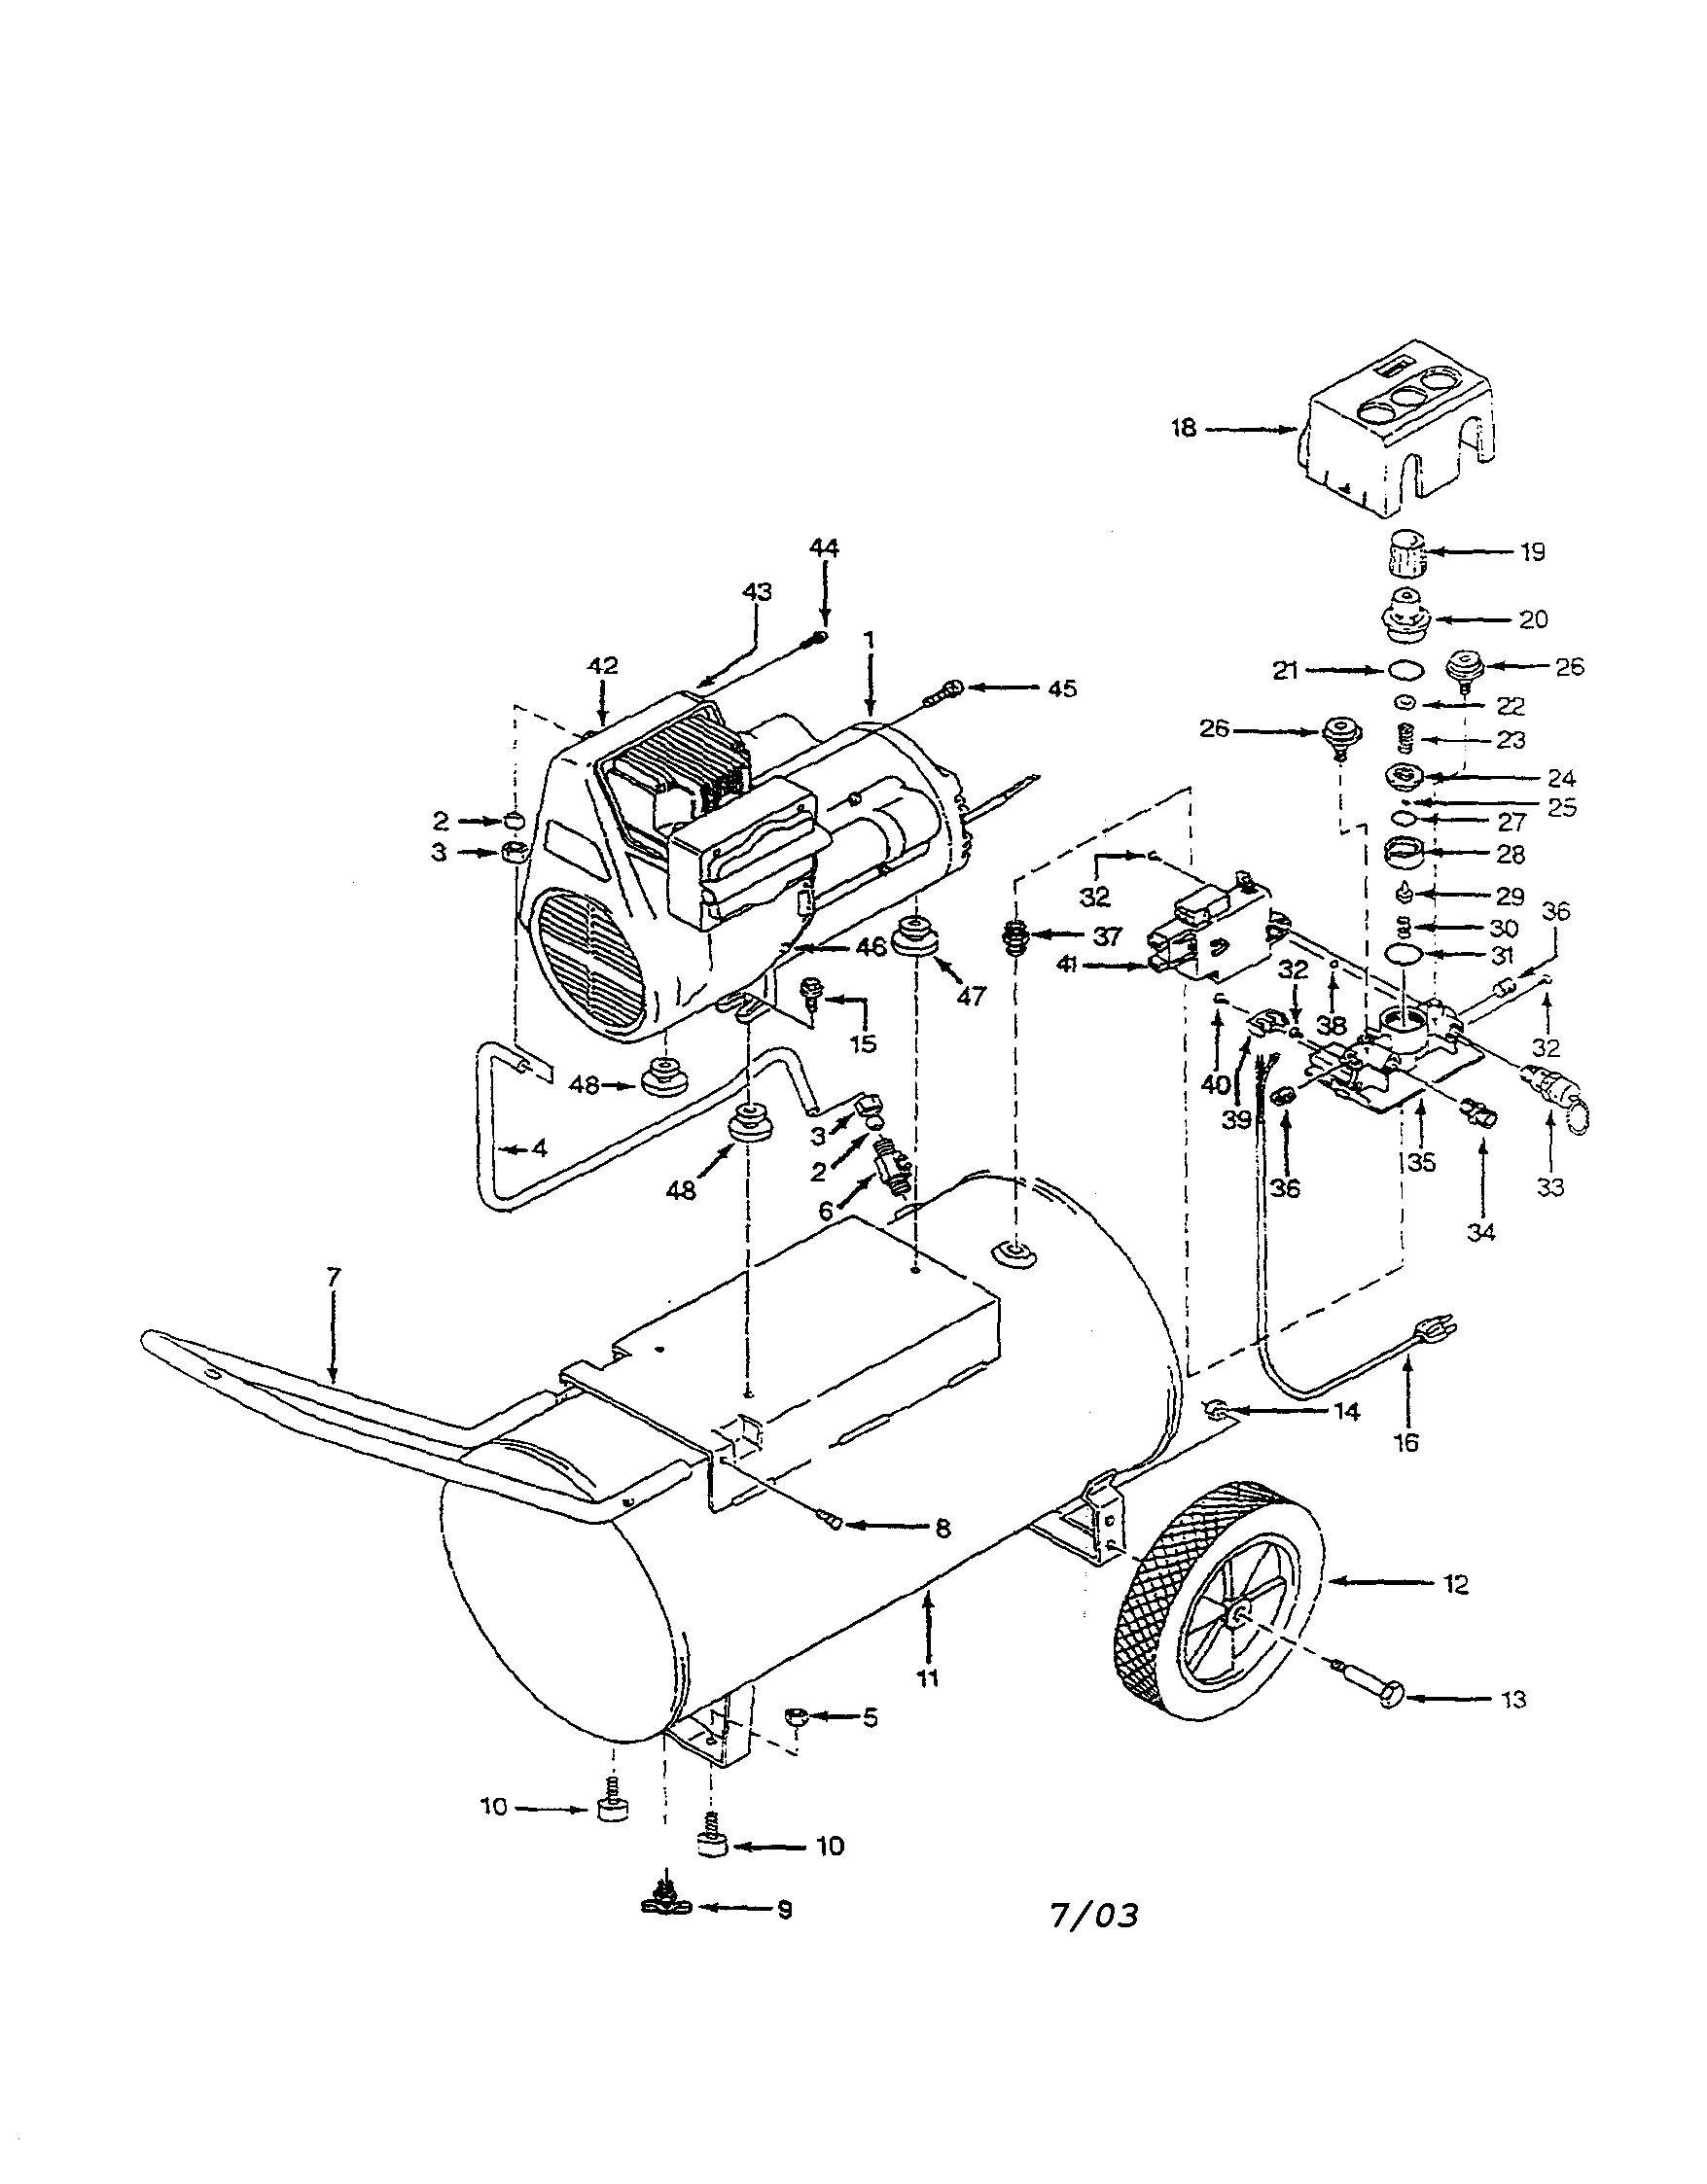 Campbell Hausfeld Air Compressor Parts Diagram Free Wiring Diagram